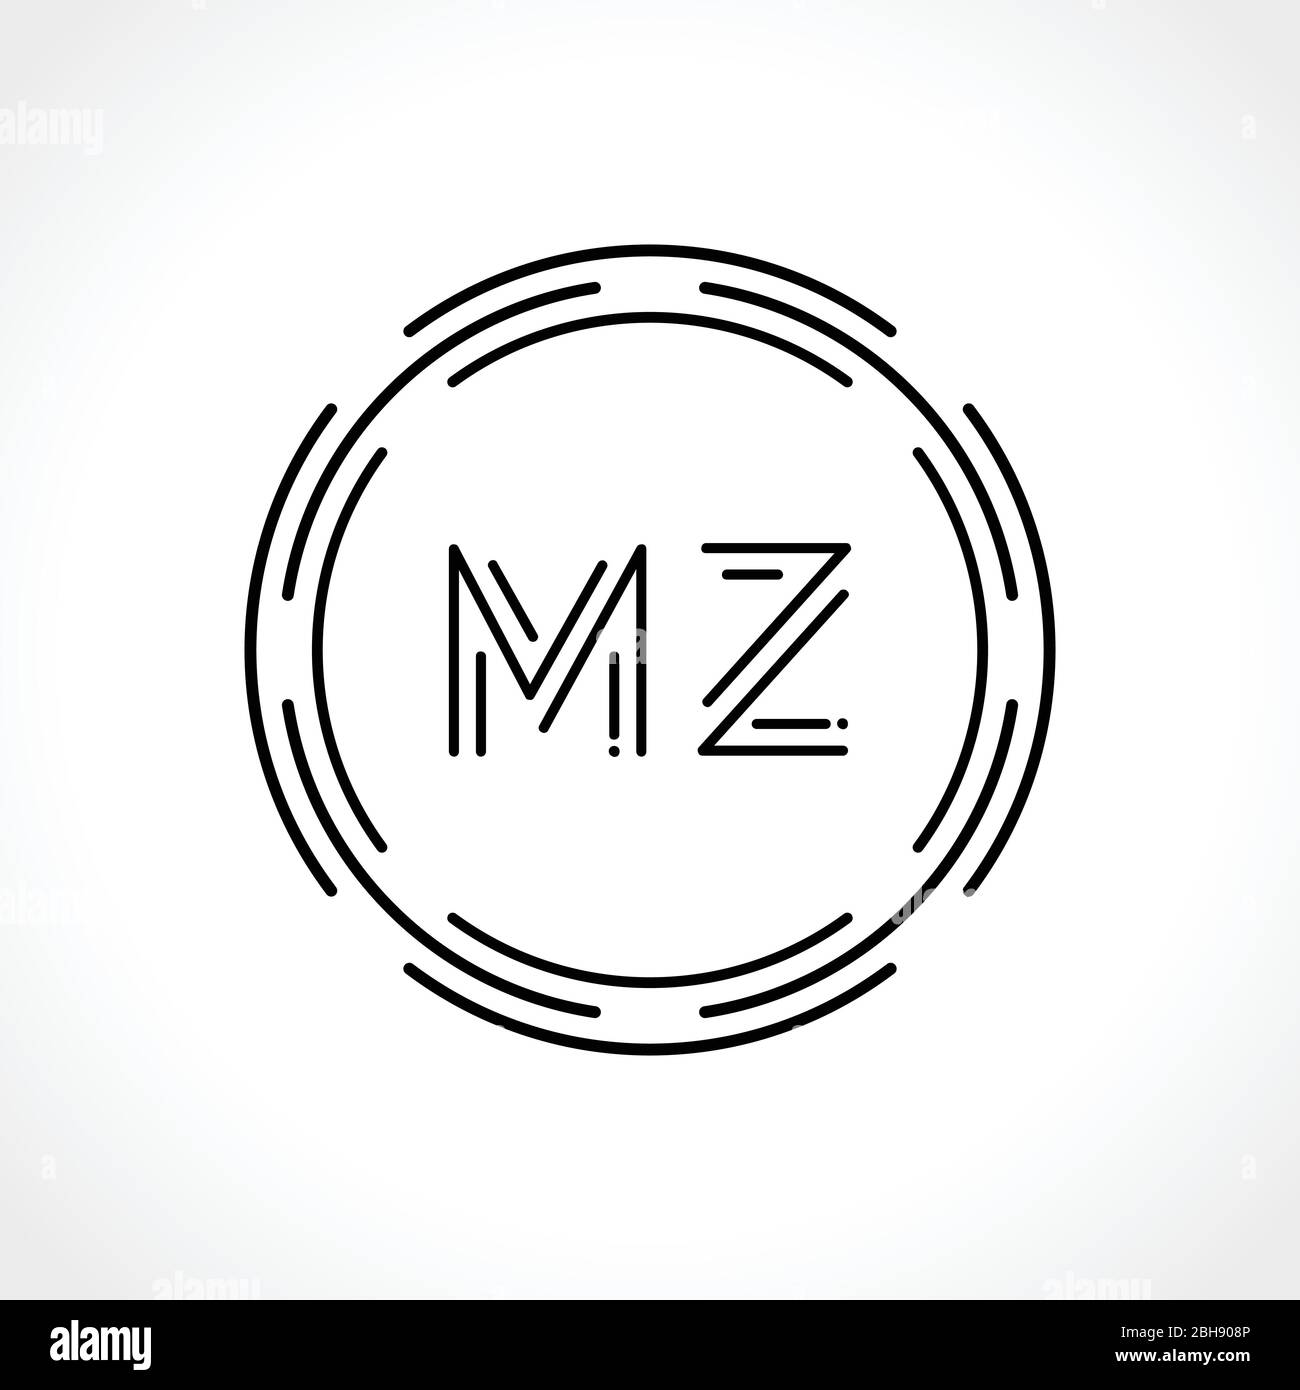 Mz logo design Stock Vector Images - Alamy